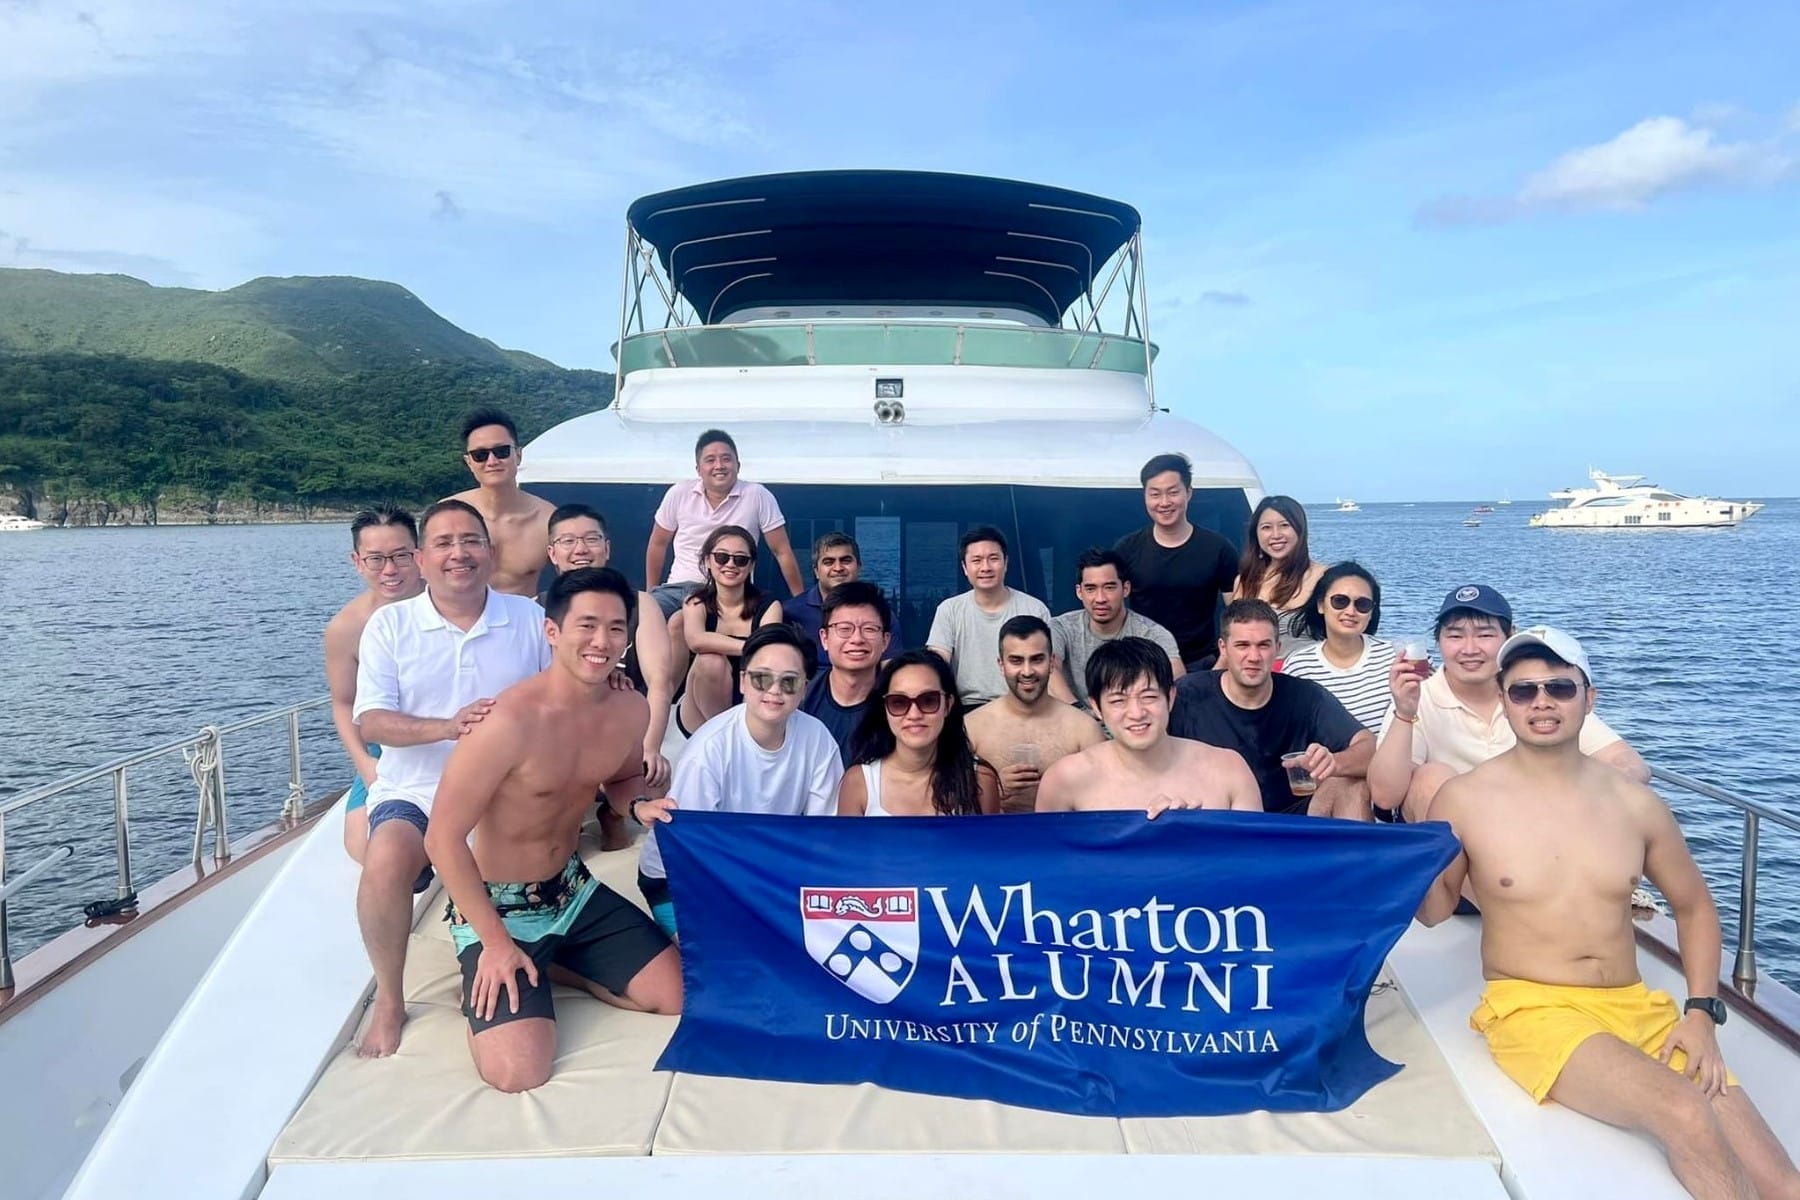 Wharton alumni gathered for a photo on a boat.